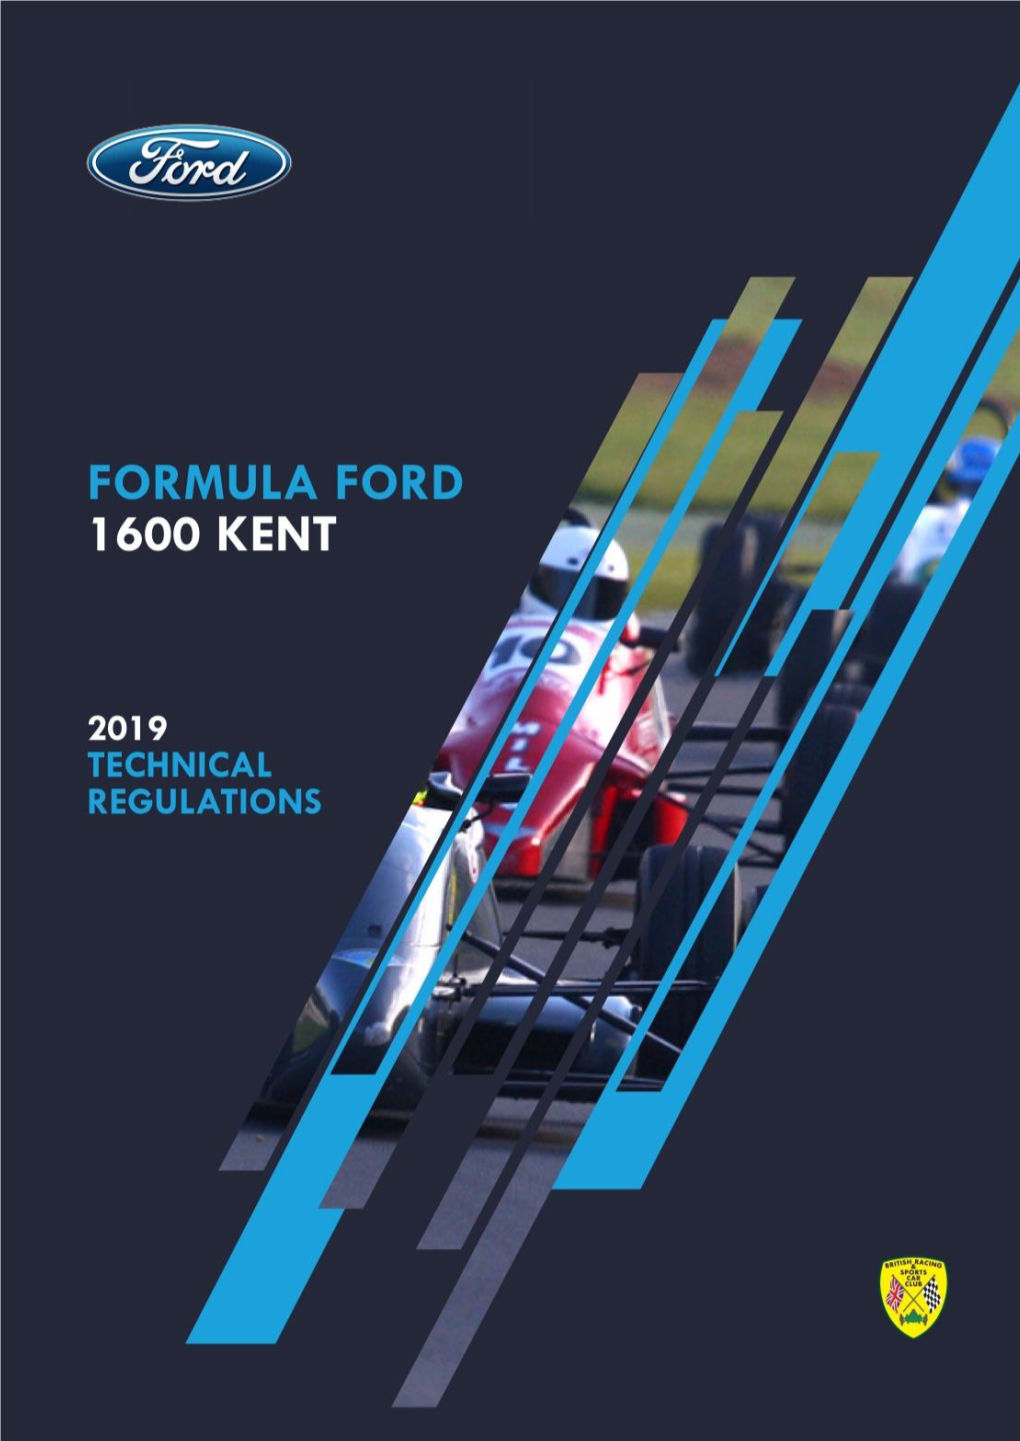 Technical Regulations for 1600 Kent